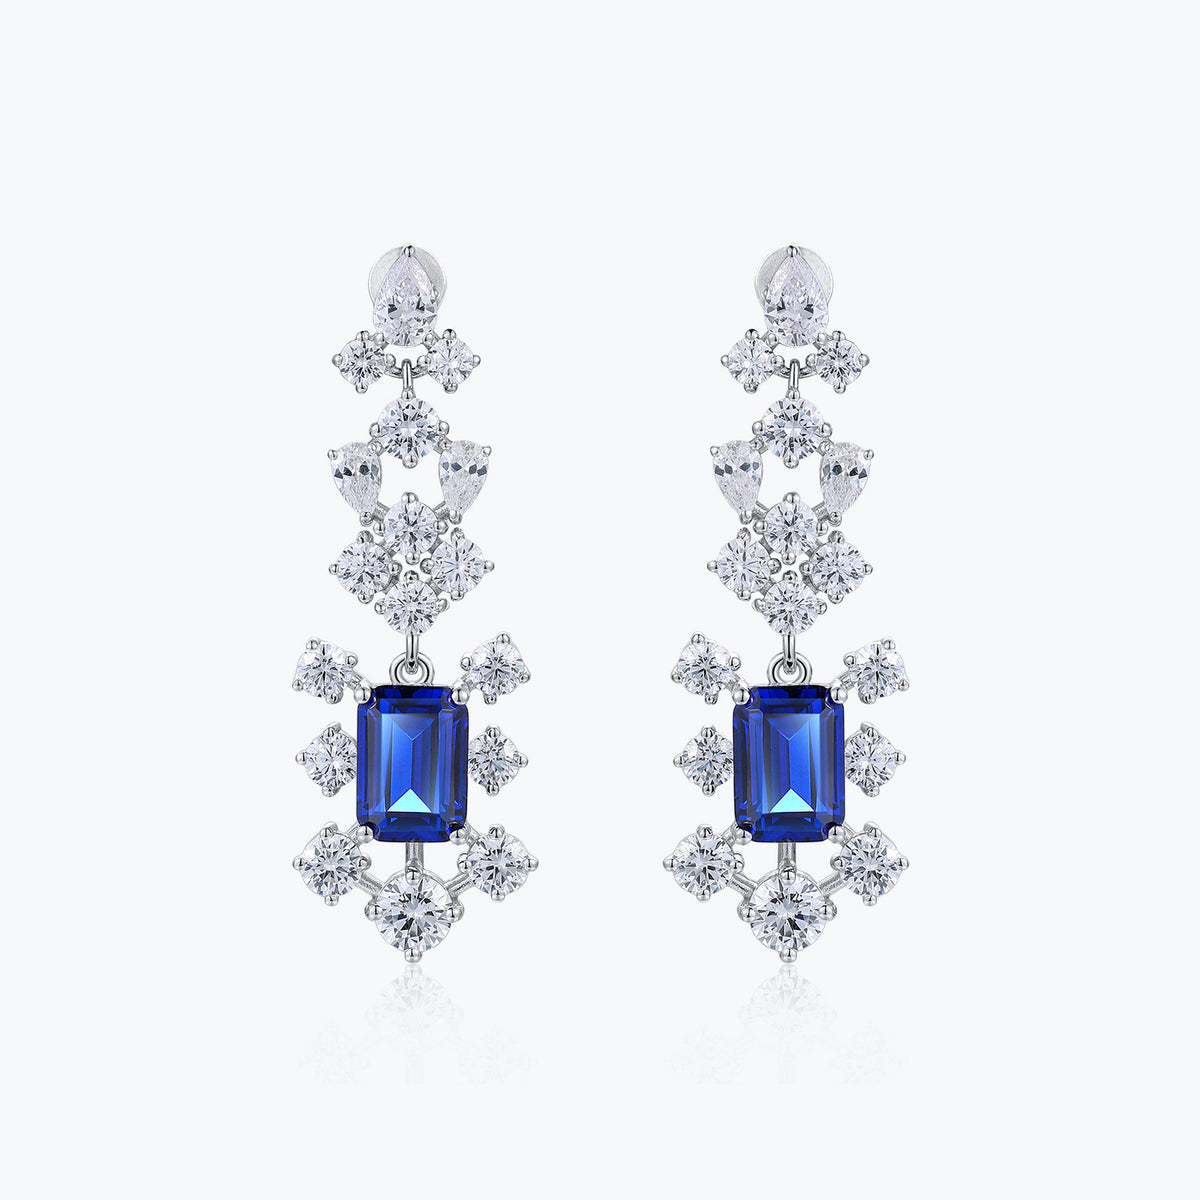 Dissoo® Sapphire-Blue Dangling Cluster Long Earrings